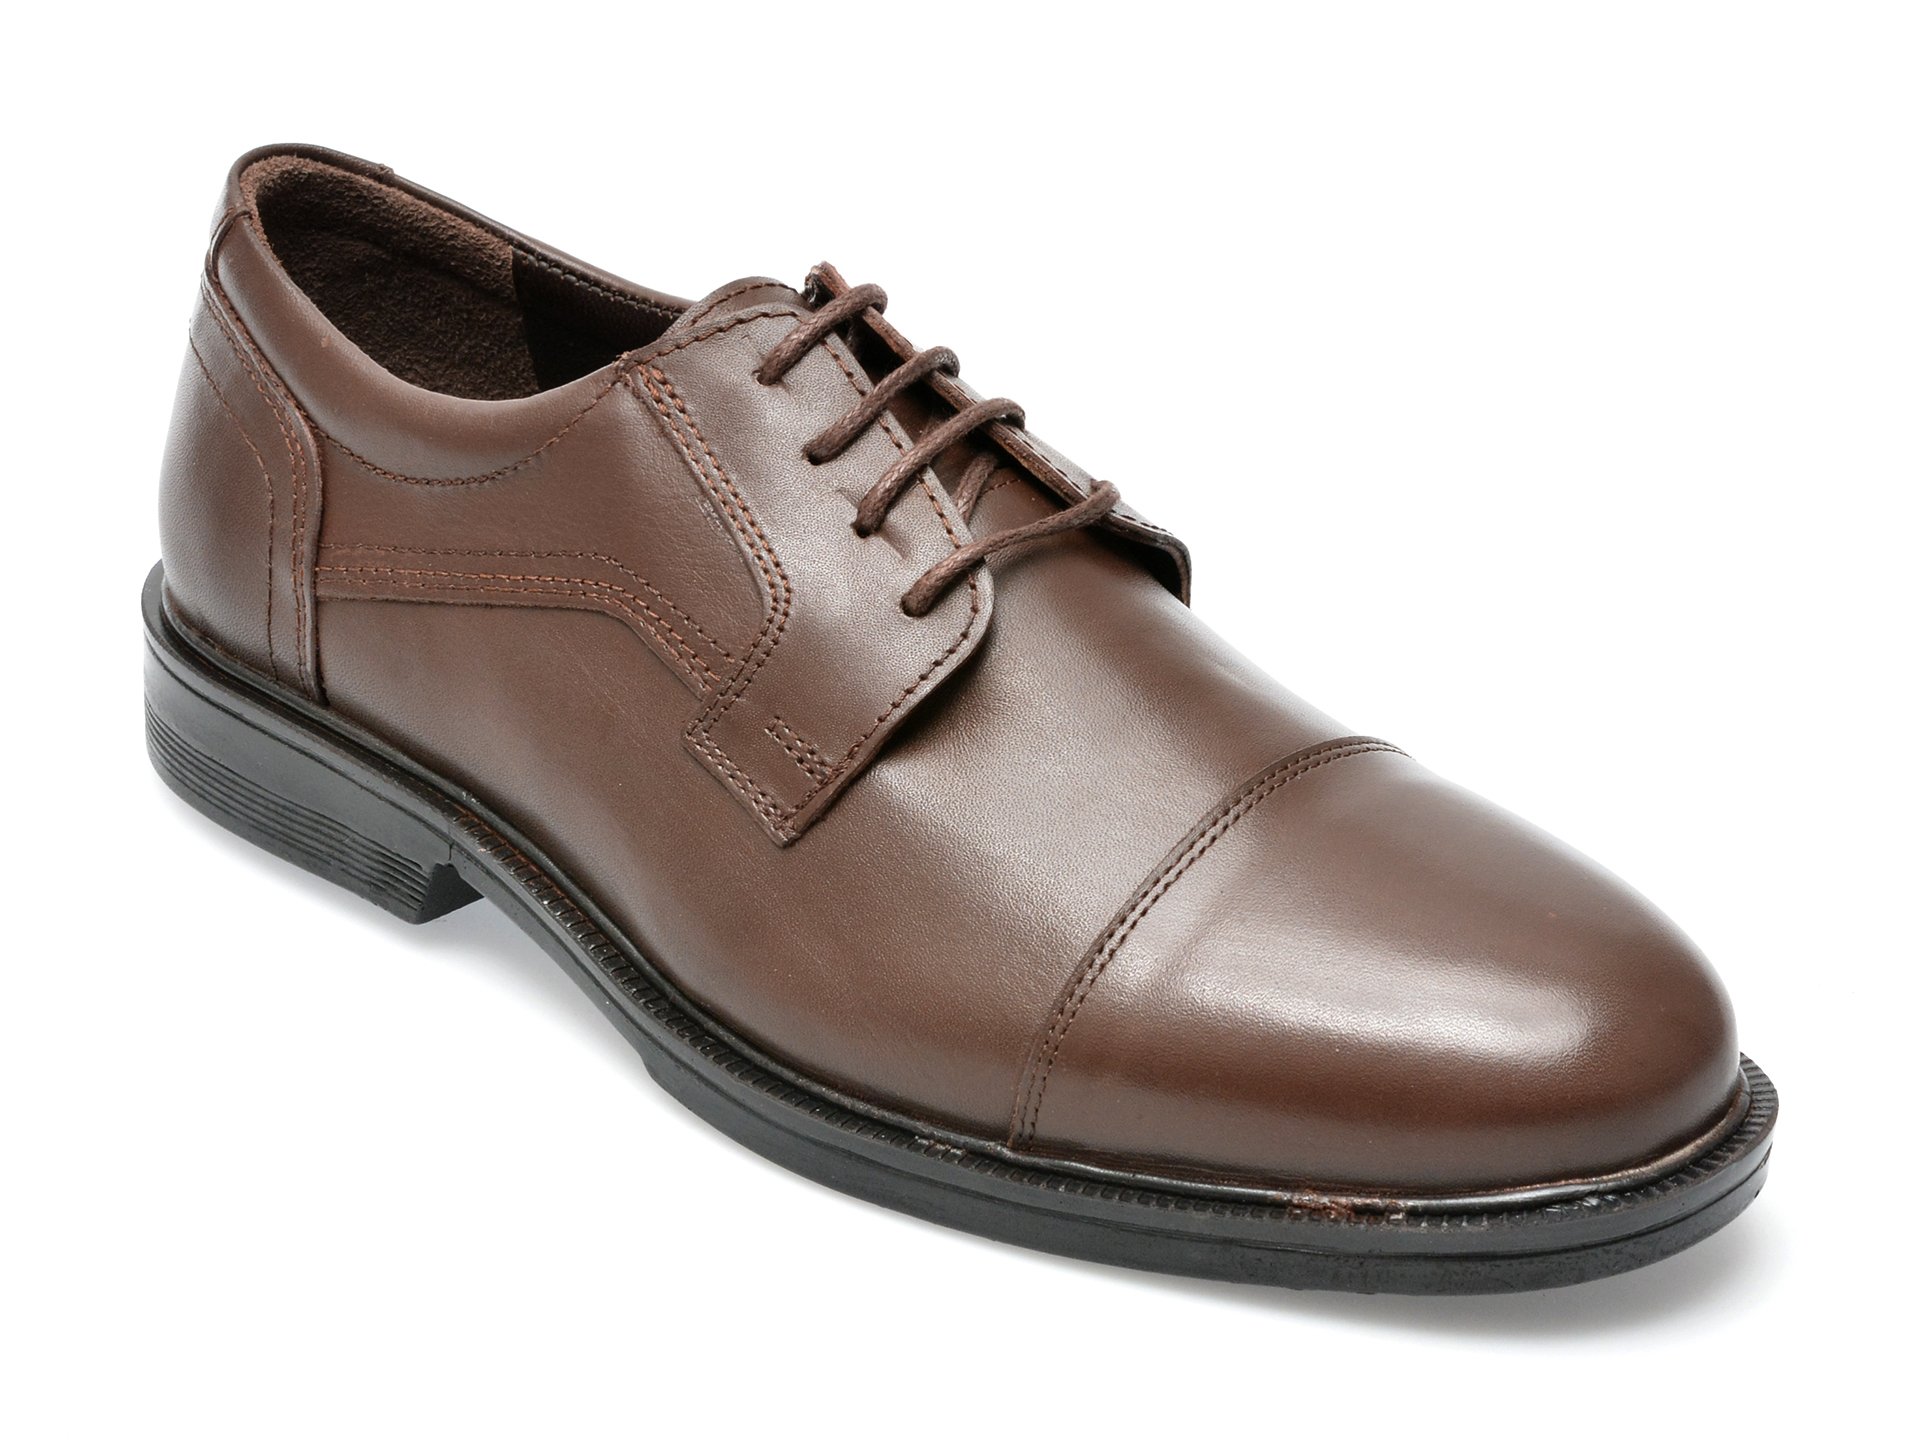 Pantofi AXXELLL maro, LT401, din piele naturala /barbati/pantofi